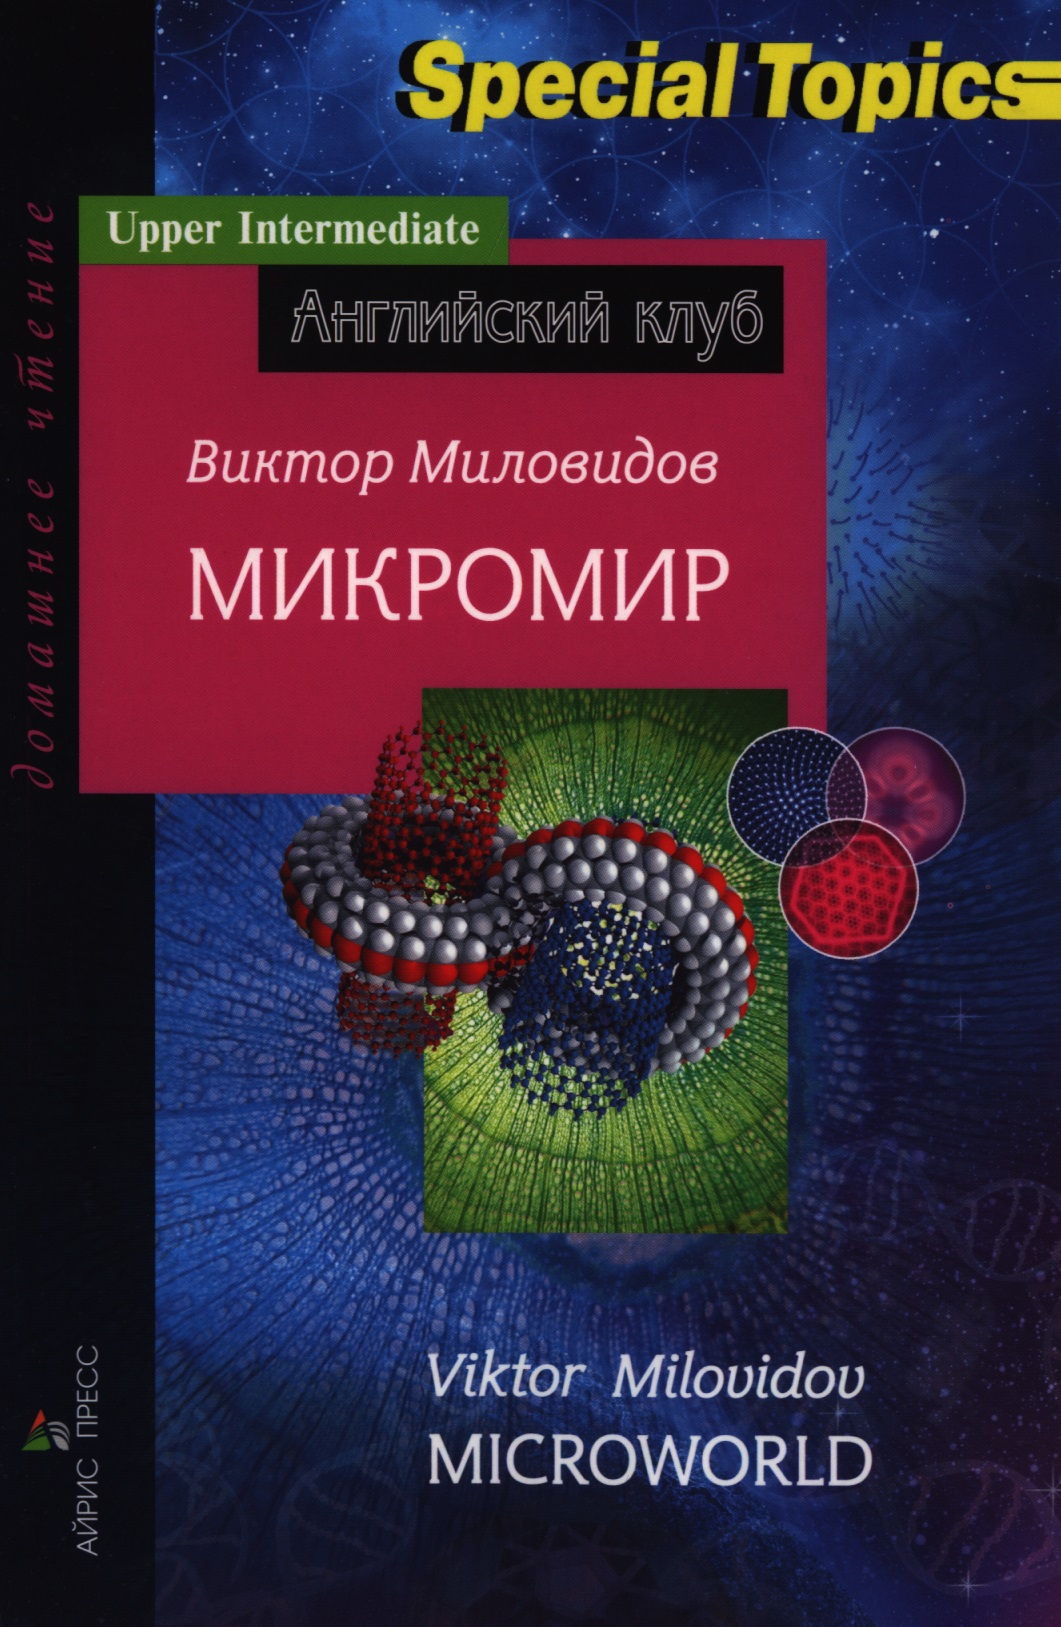 Миловидов Виктор Александрович - Микромир =  Microworld